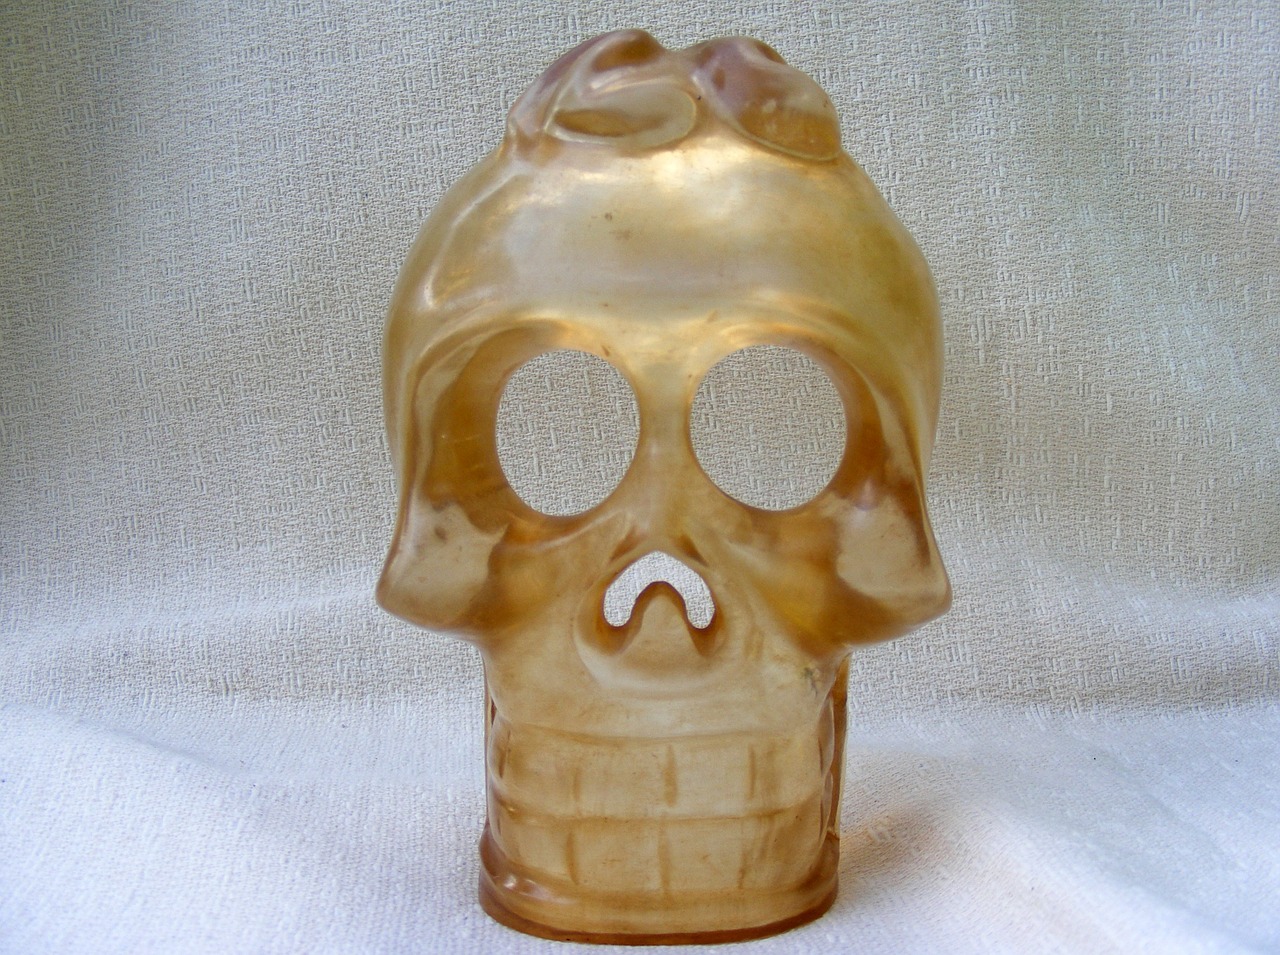 crystal skull mask free photo